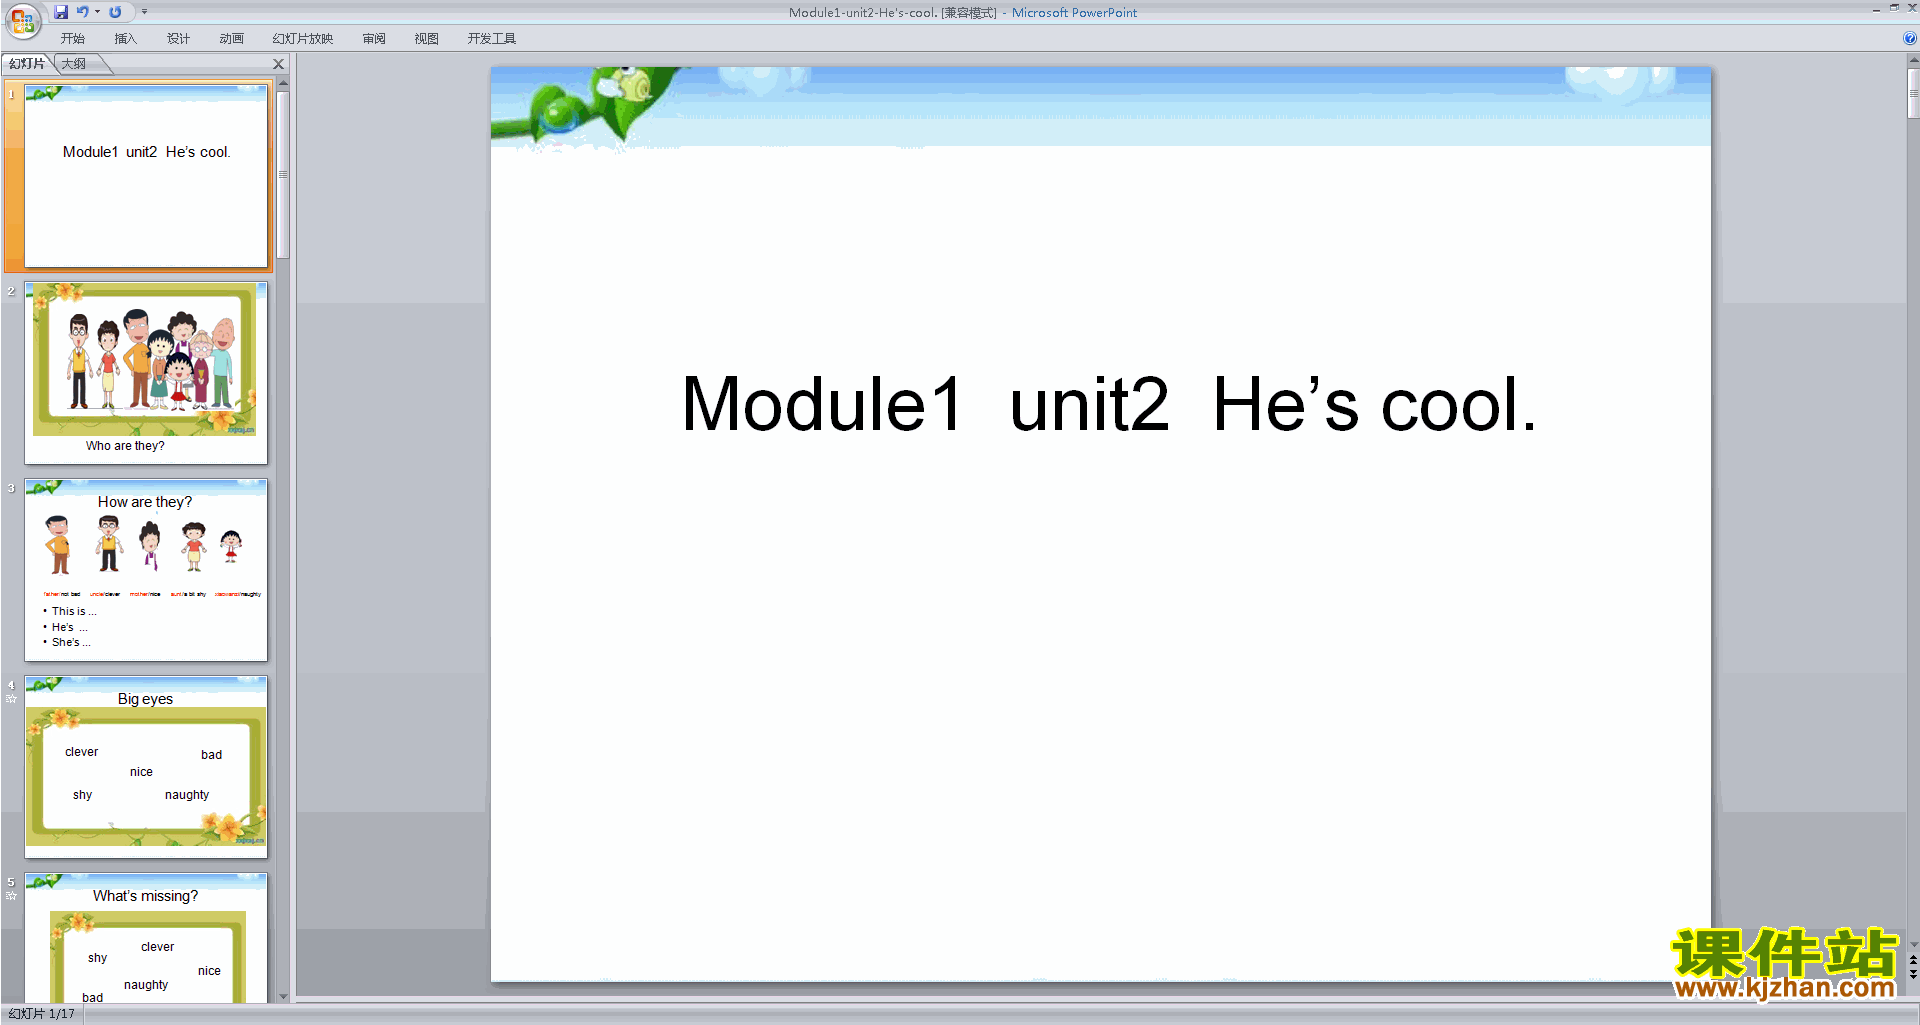 Module1 Unit2 He